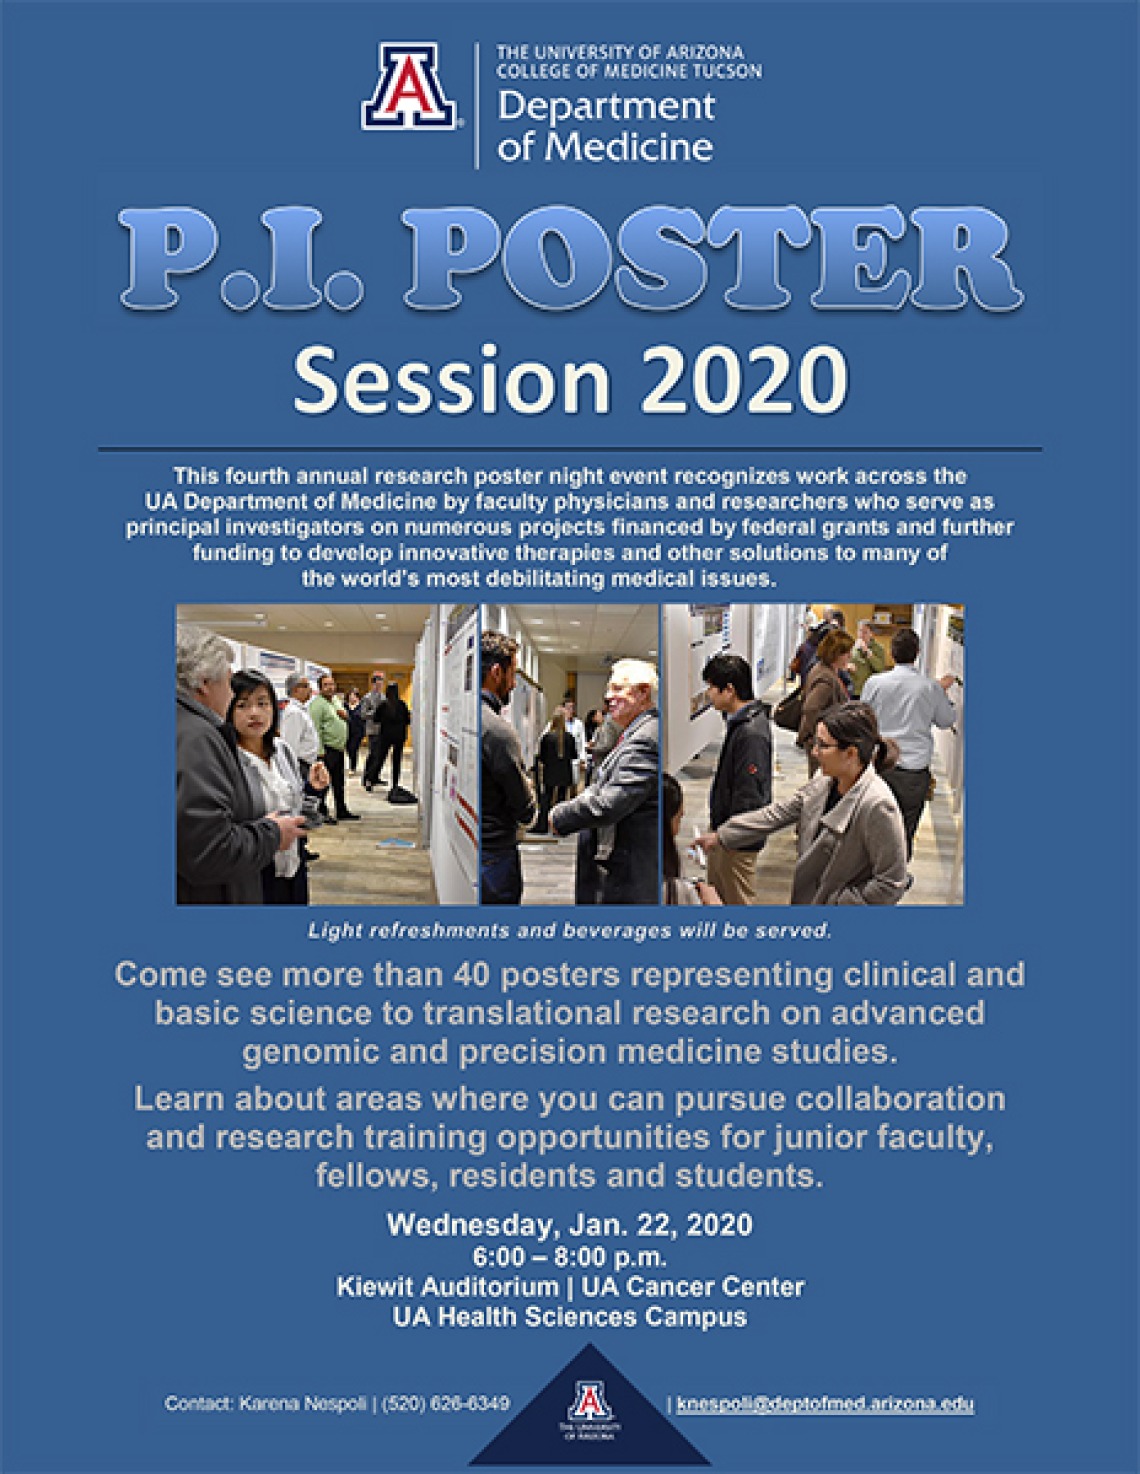 2020_pi-poster-session_01-22-20_blue-flyer_464x600px-96dpi_0.jpg